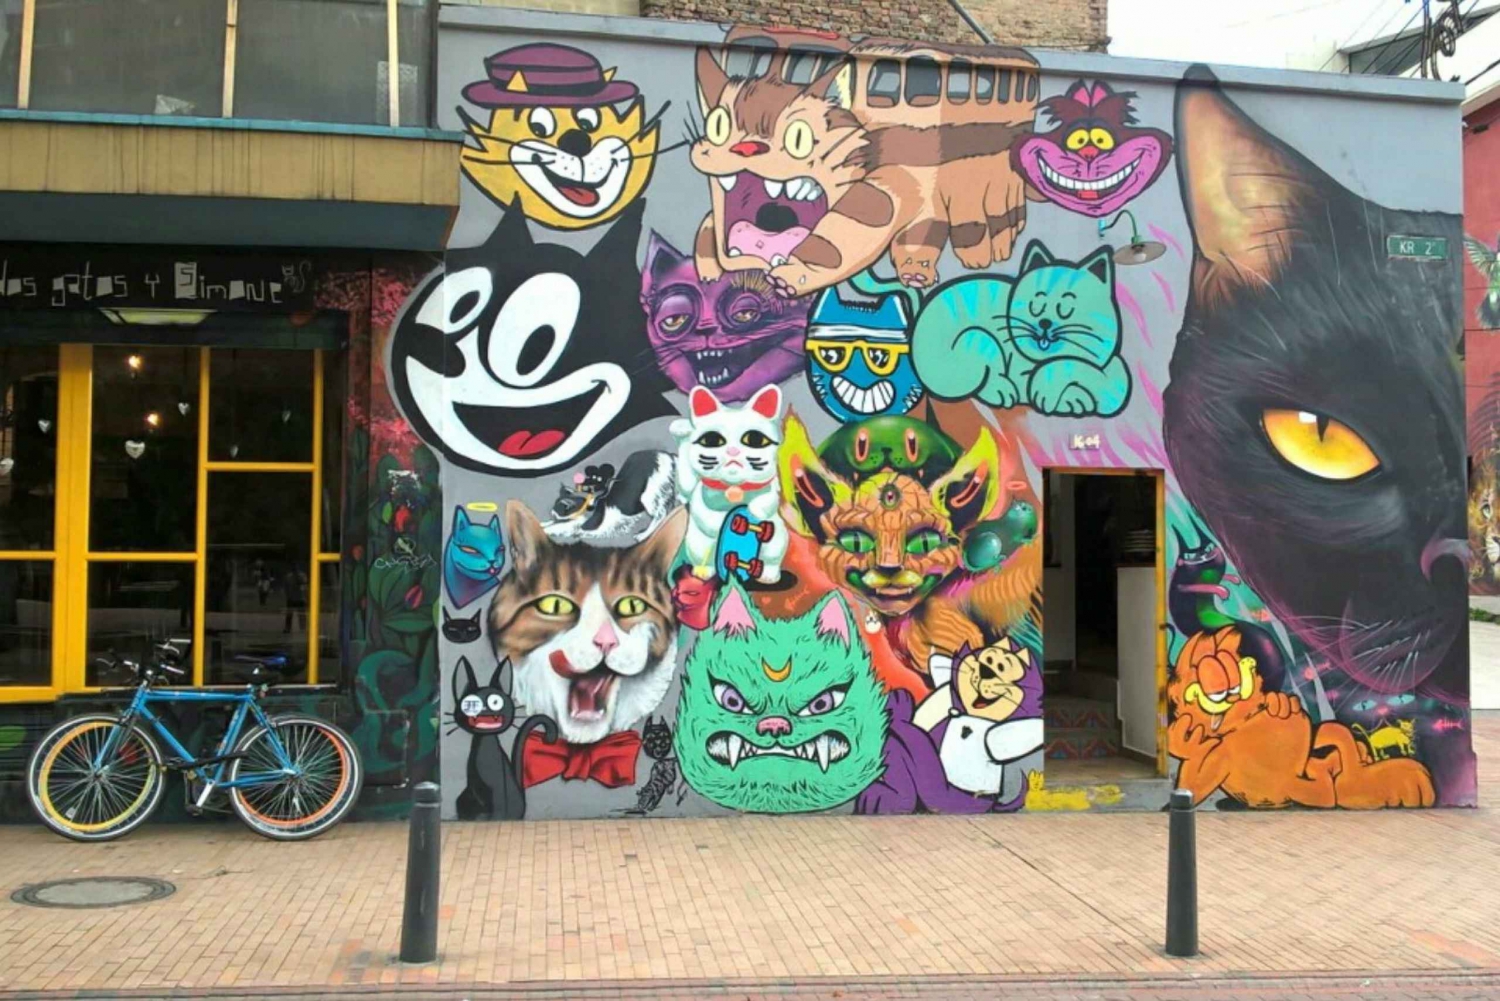 Bogotá Street Art and Graffiti Tour 3 Hrs